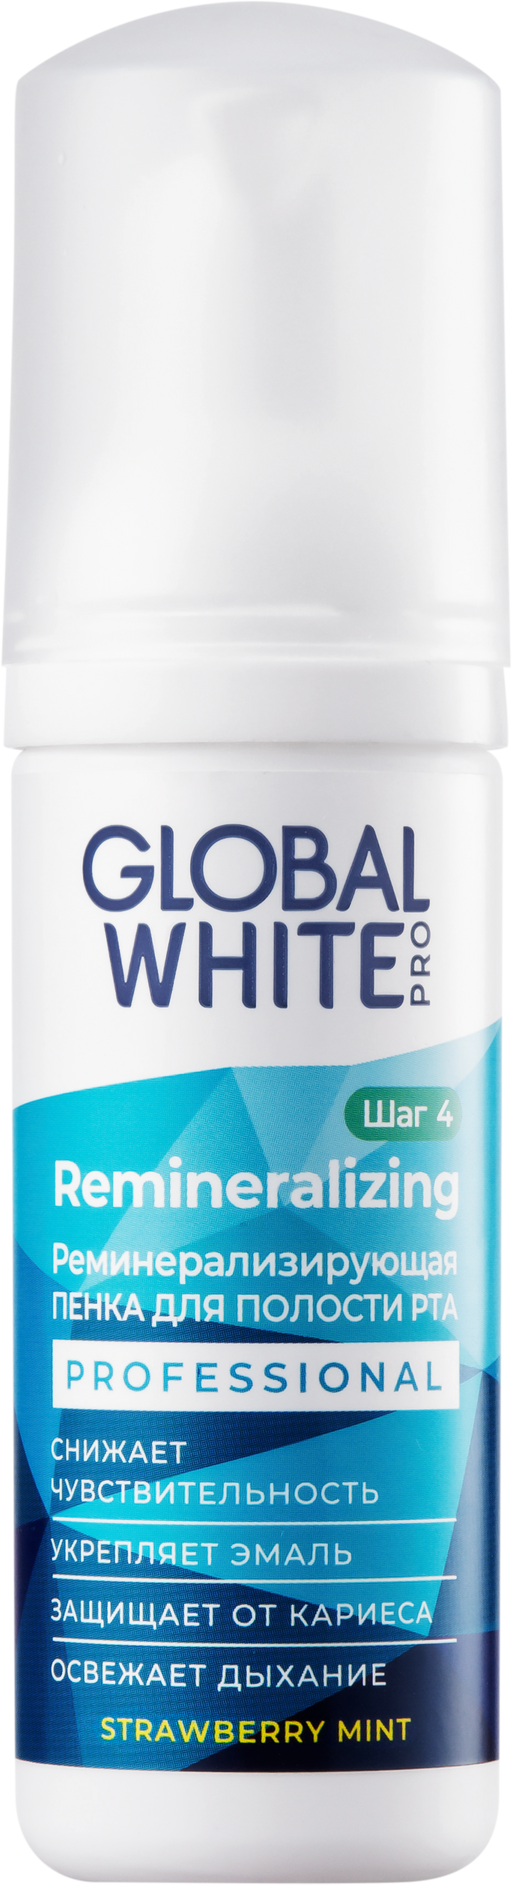 Global White пенка реминерализирующая, 50 мл, 1 шт.